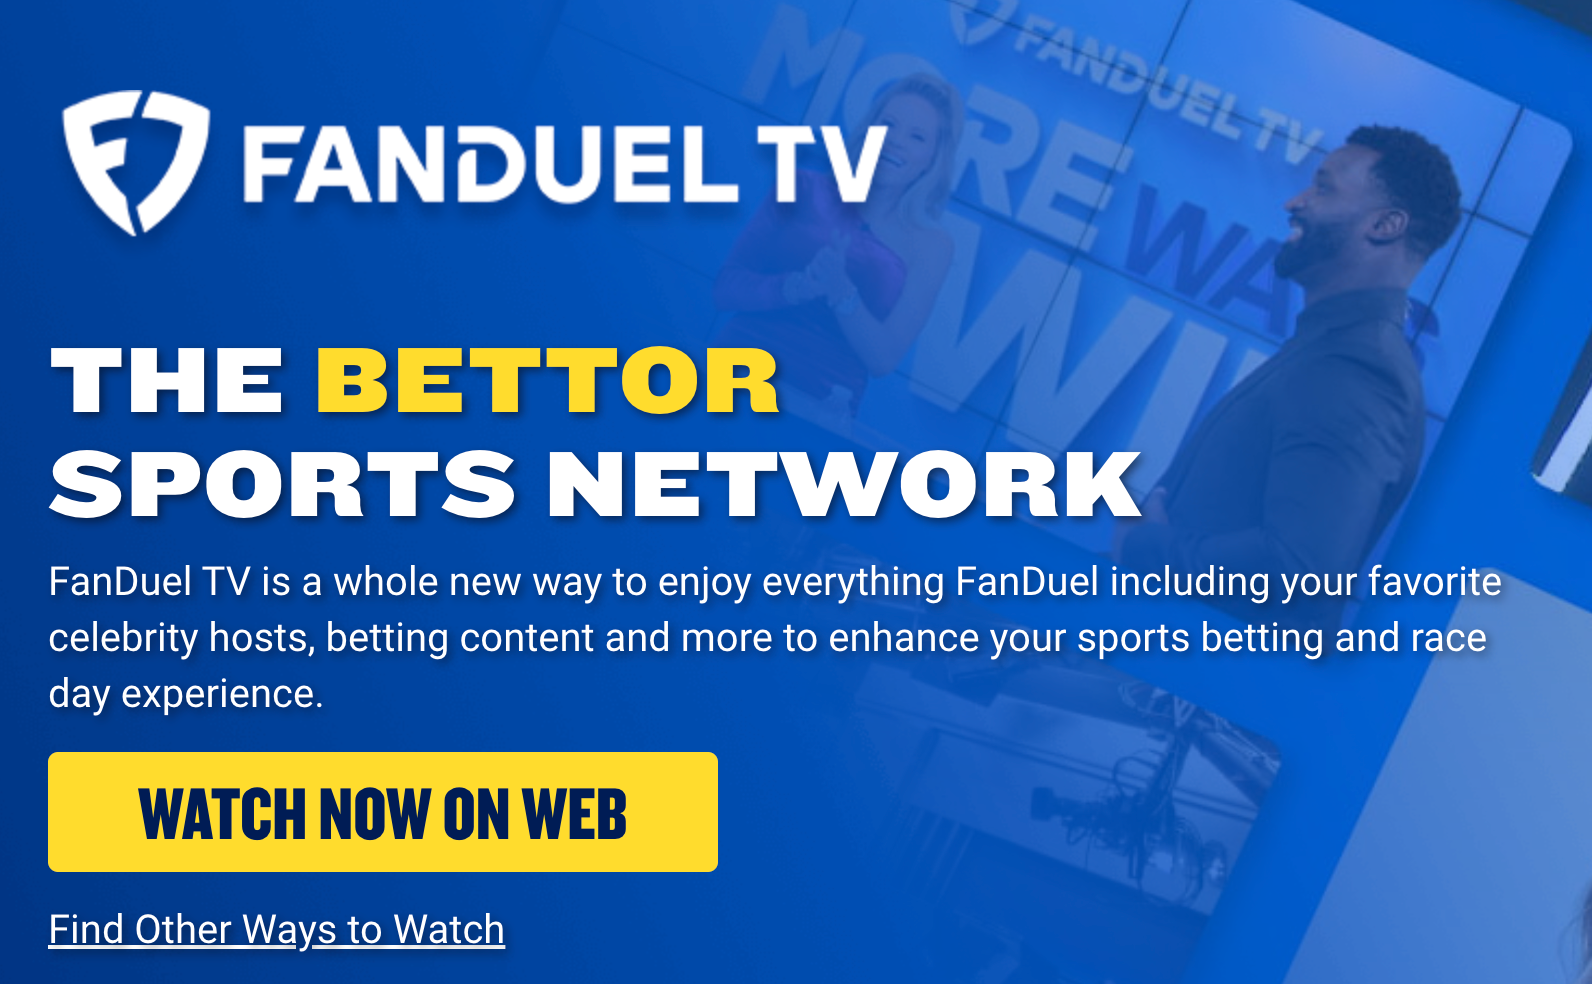 FanDuel live streaming